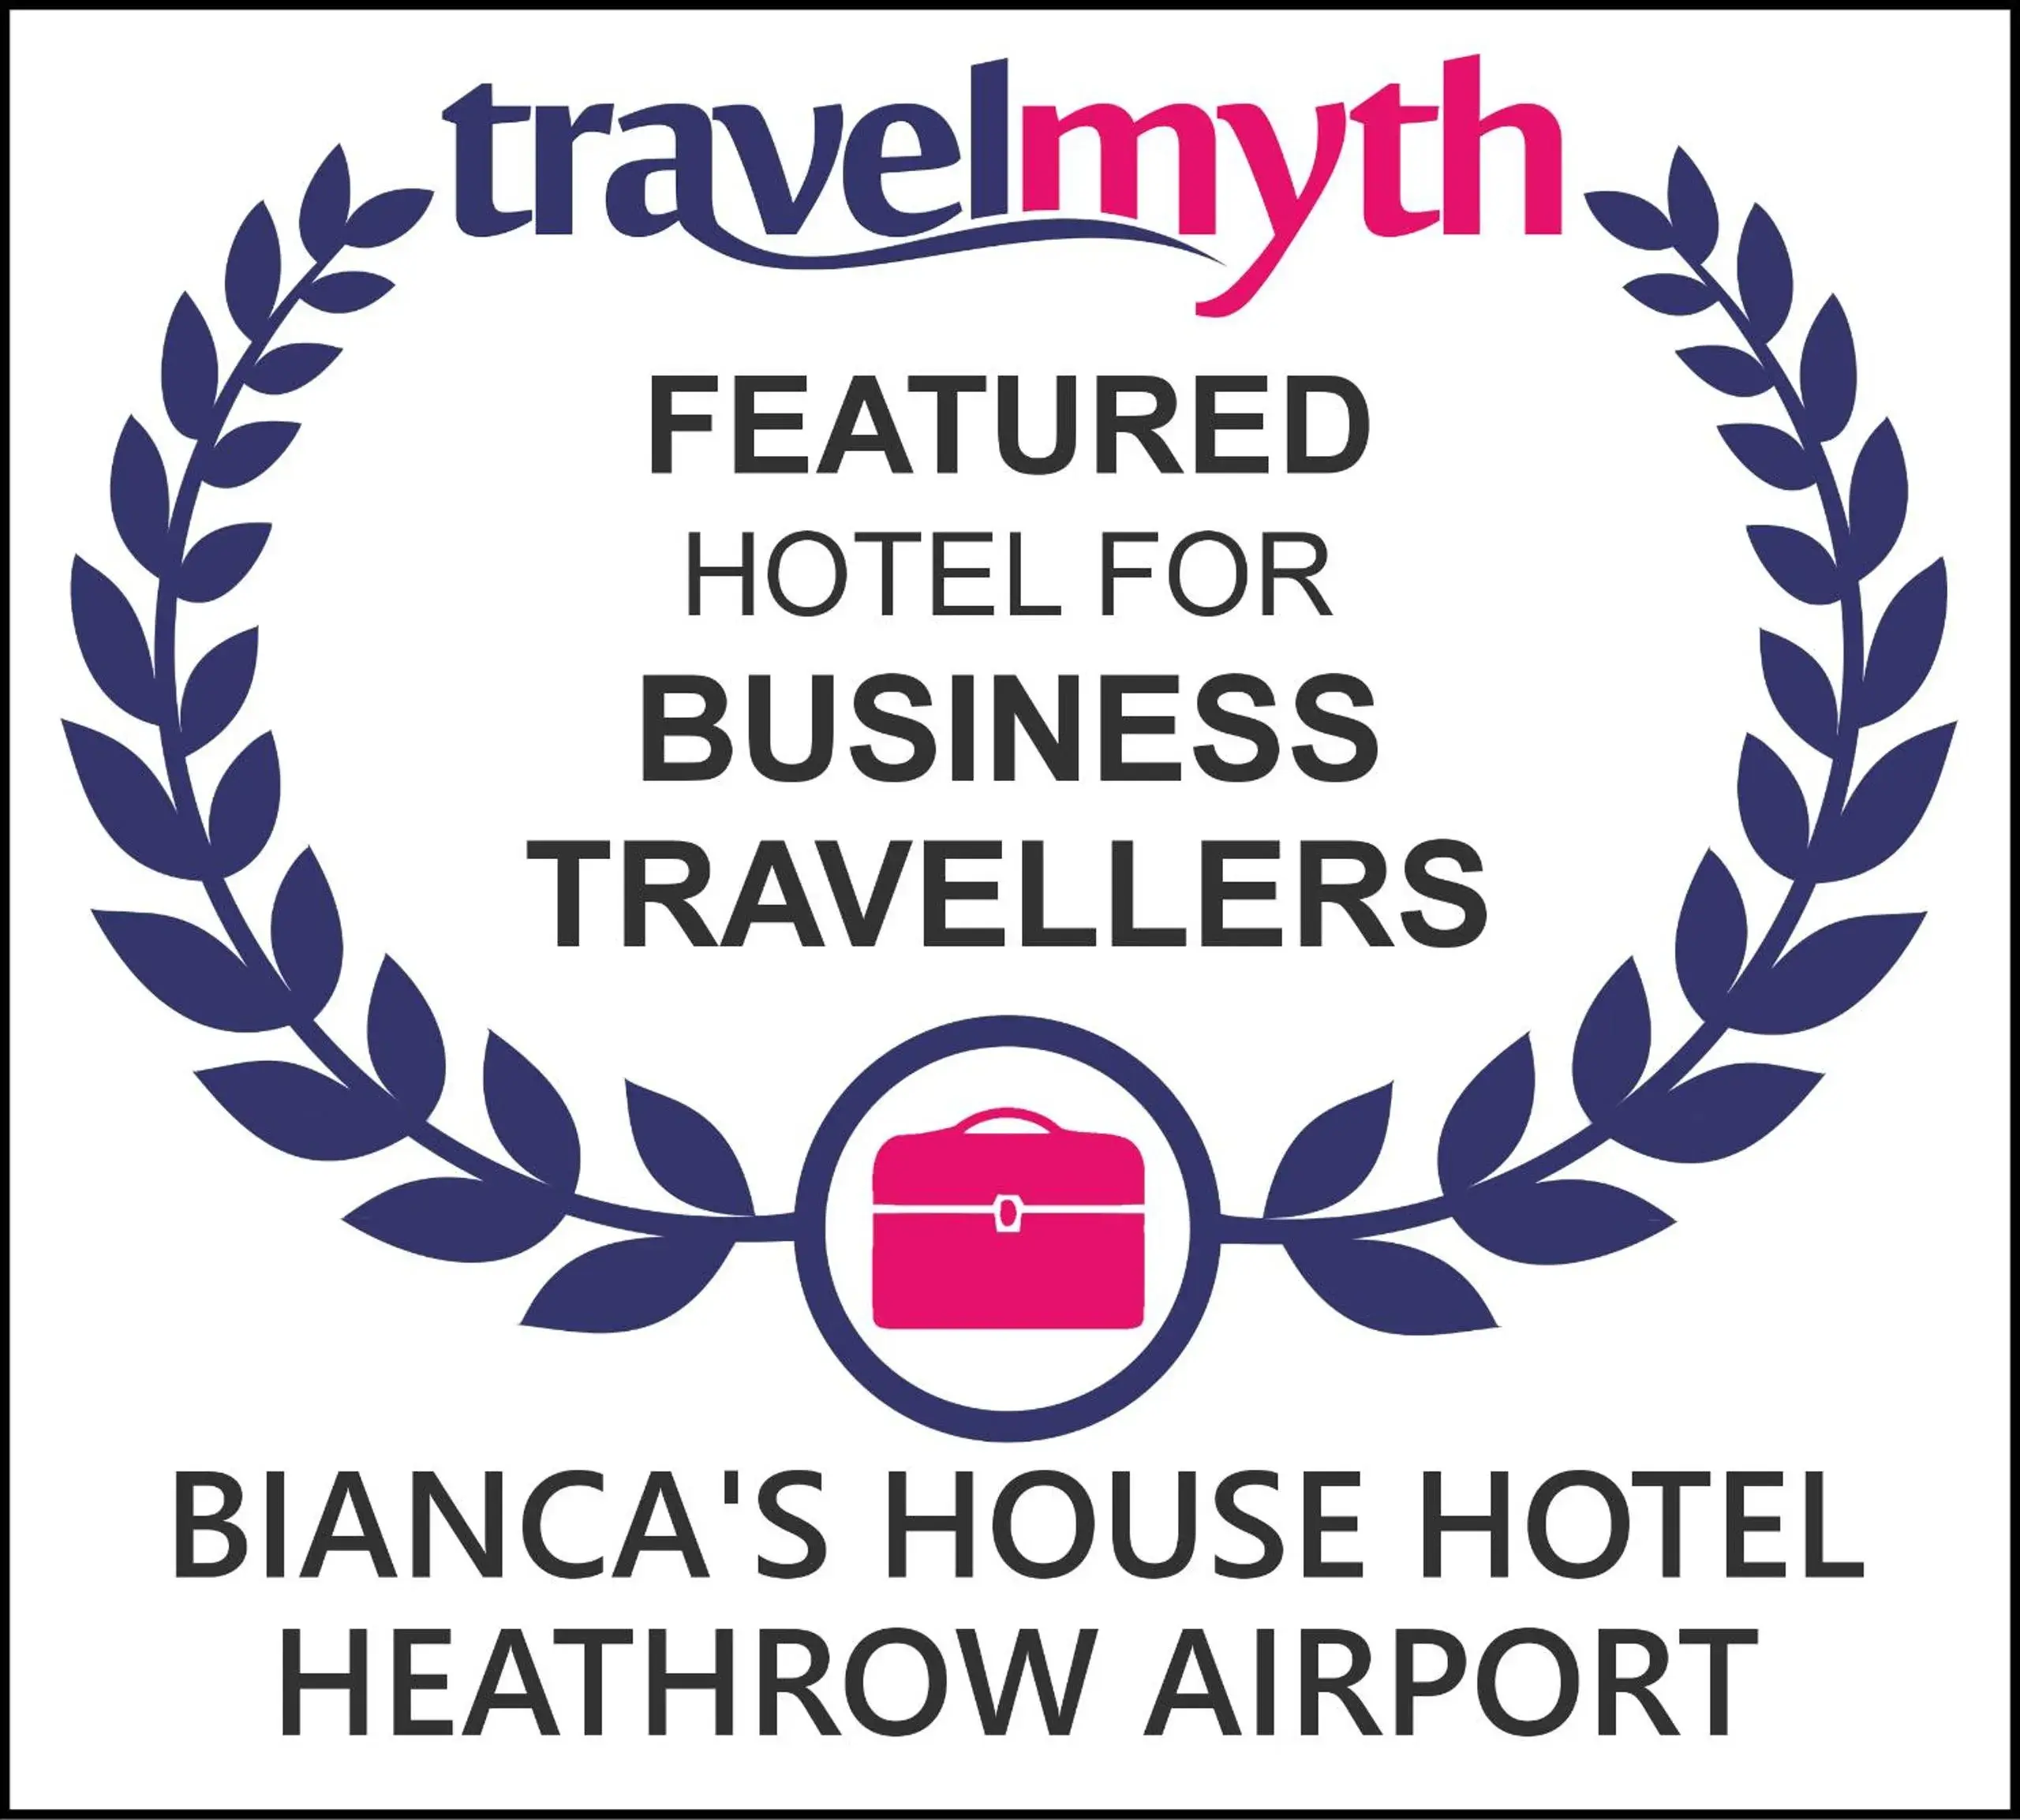 Bianca's House Hotel Heathrow Airport